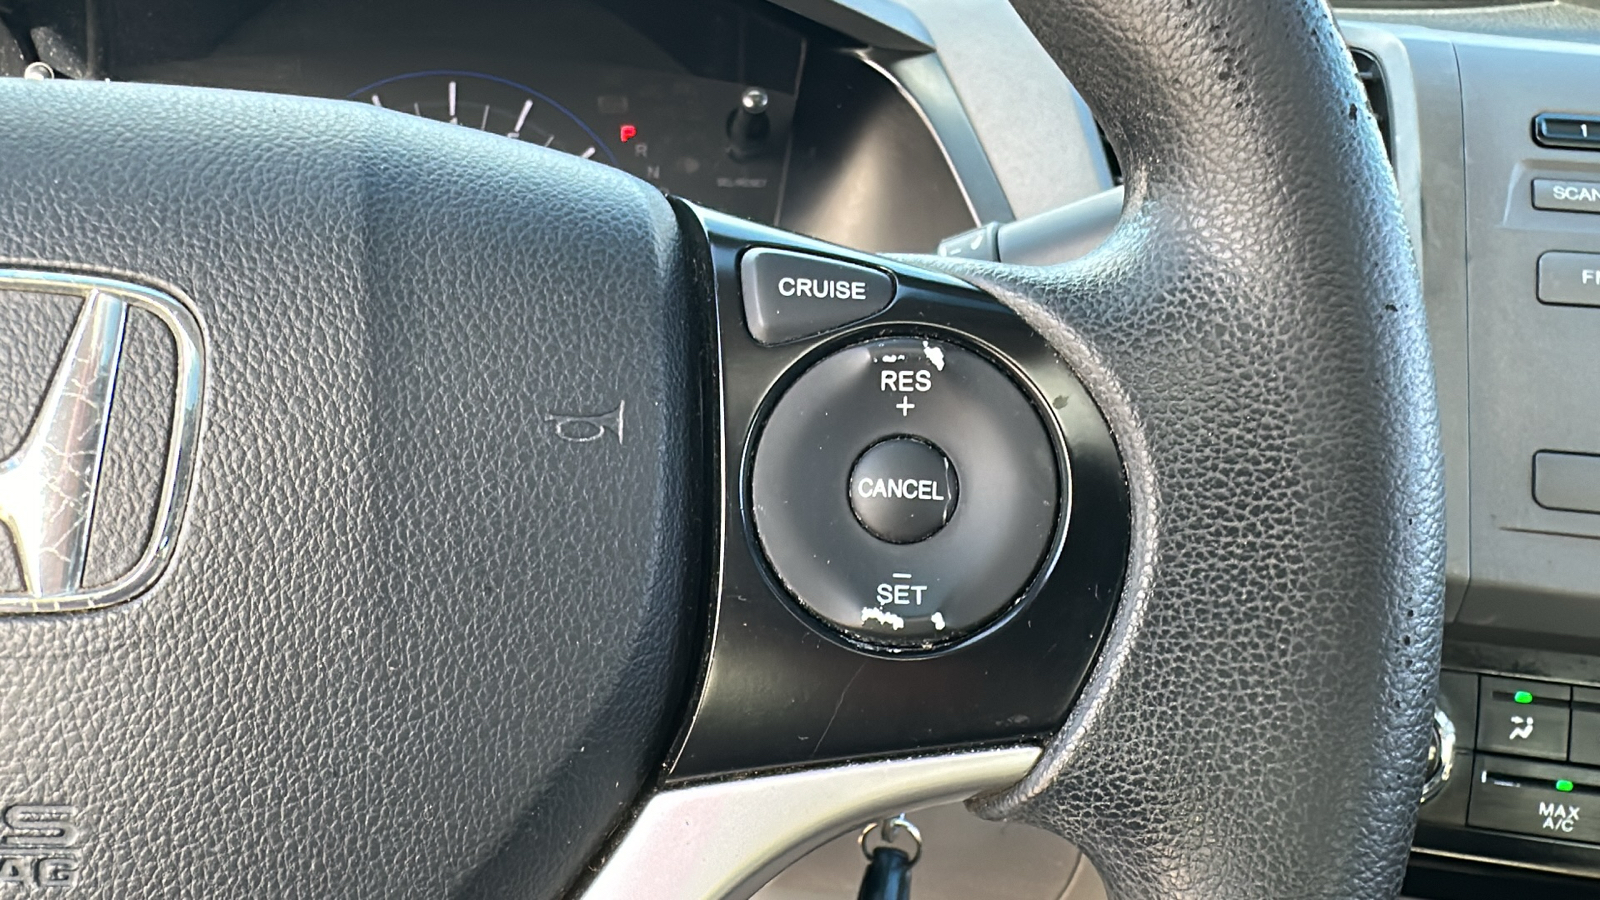 2012 Honda Civic EX 19